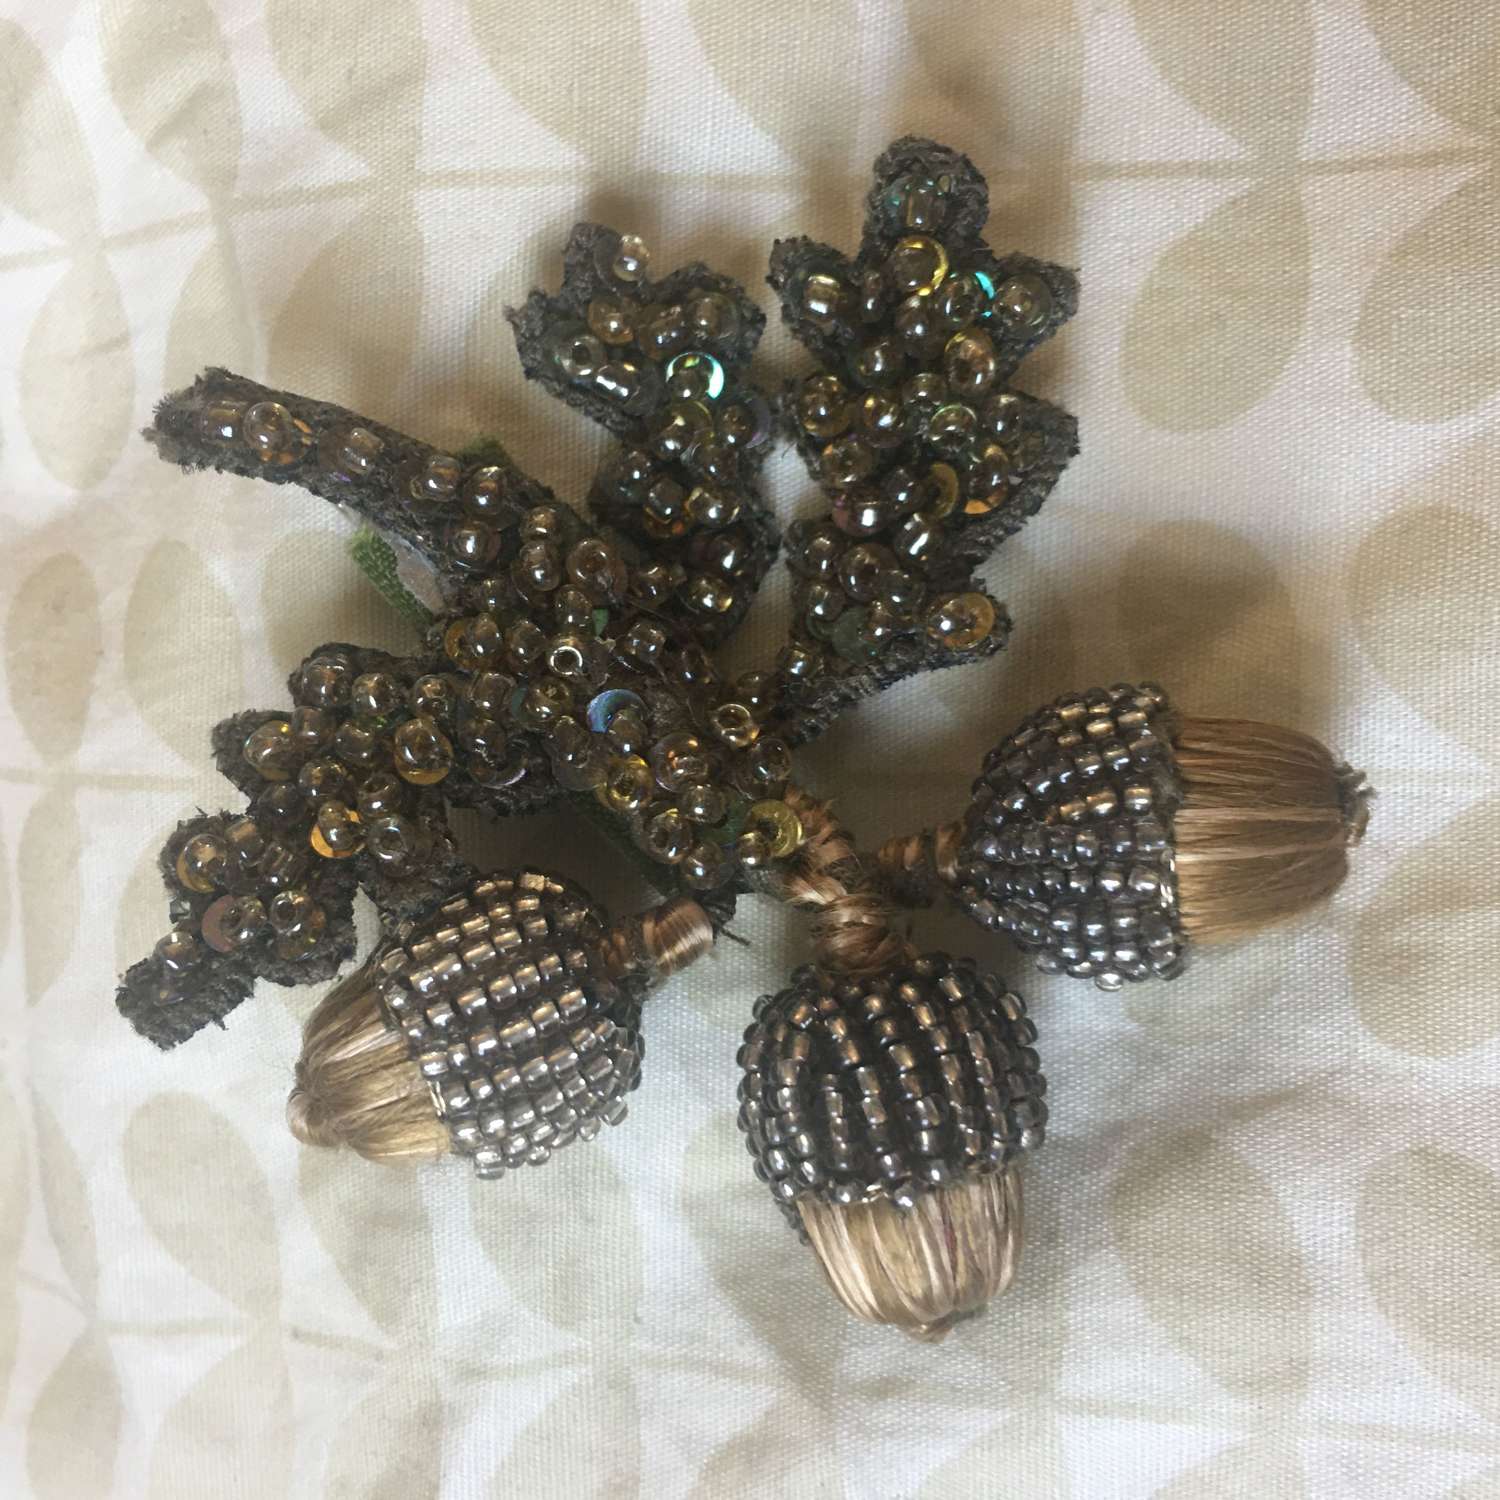 Acorn brooch with three beaded acorns